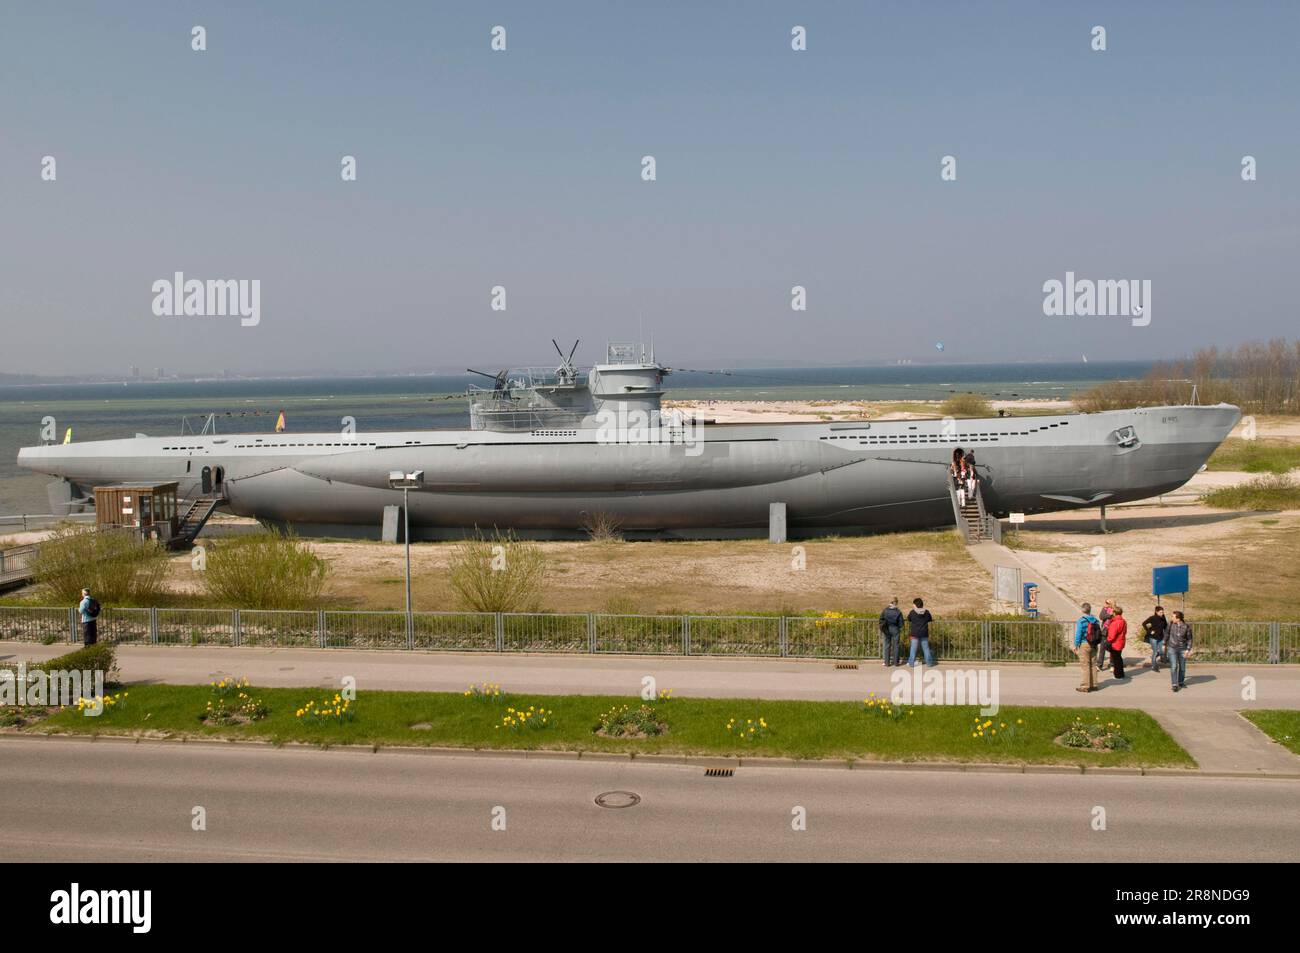 https://c8.alamy.com/comp/2R8NDG9/museum-ship-submarine-u995-technical-museum-baltic-sea-resort-laboe-bay-of-kiel-schleswig-holstein-germany-2R8NDG9.jpg